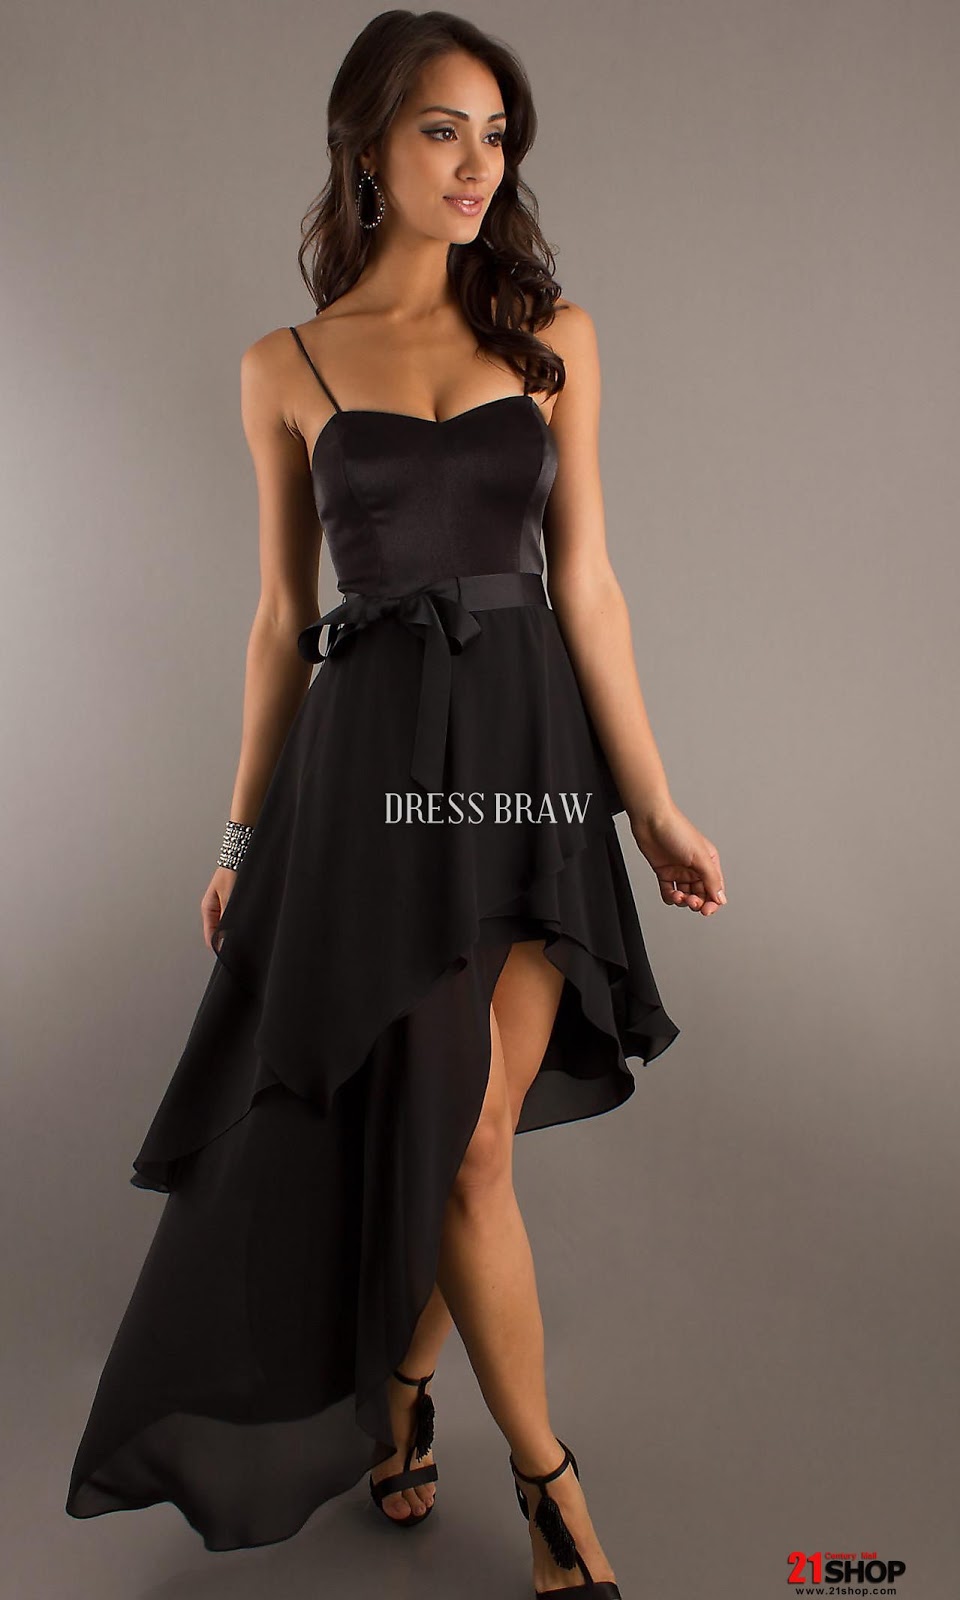 Black Cocktail Dress 2013 | Miss-24